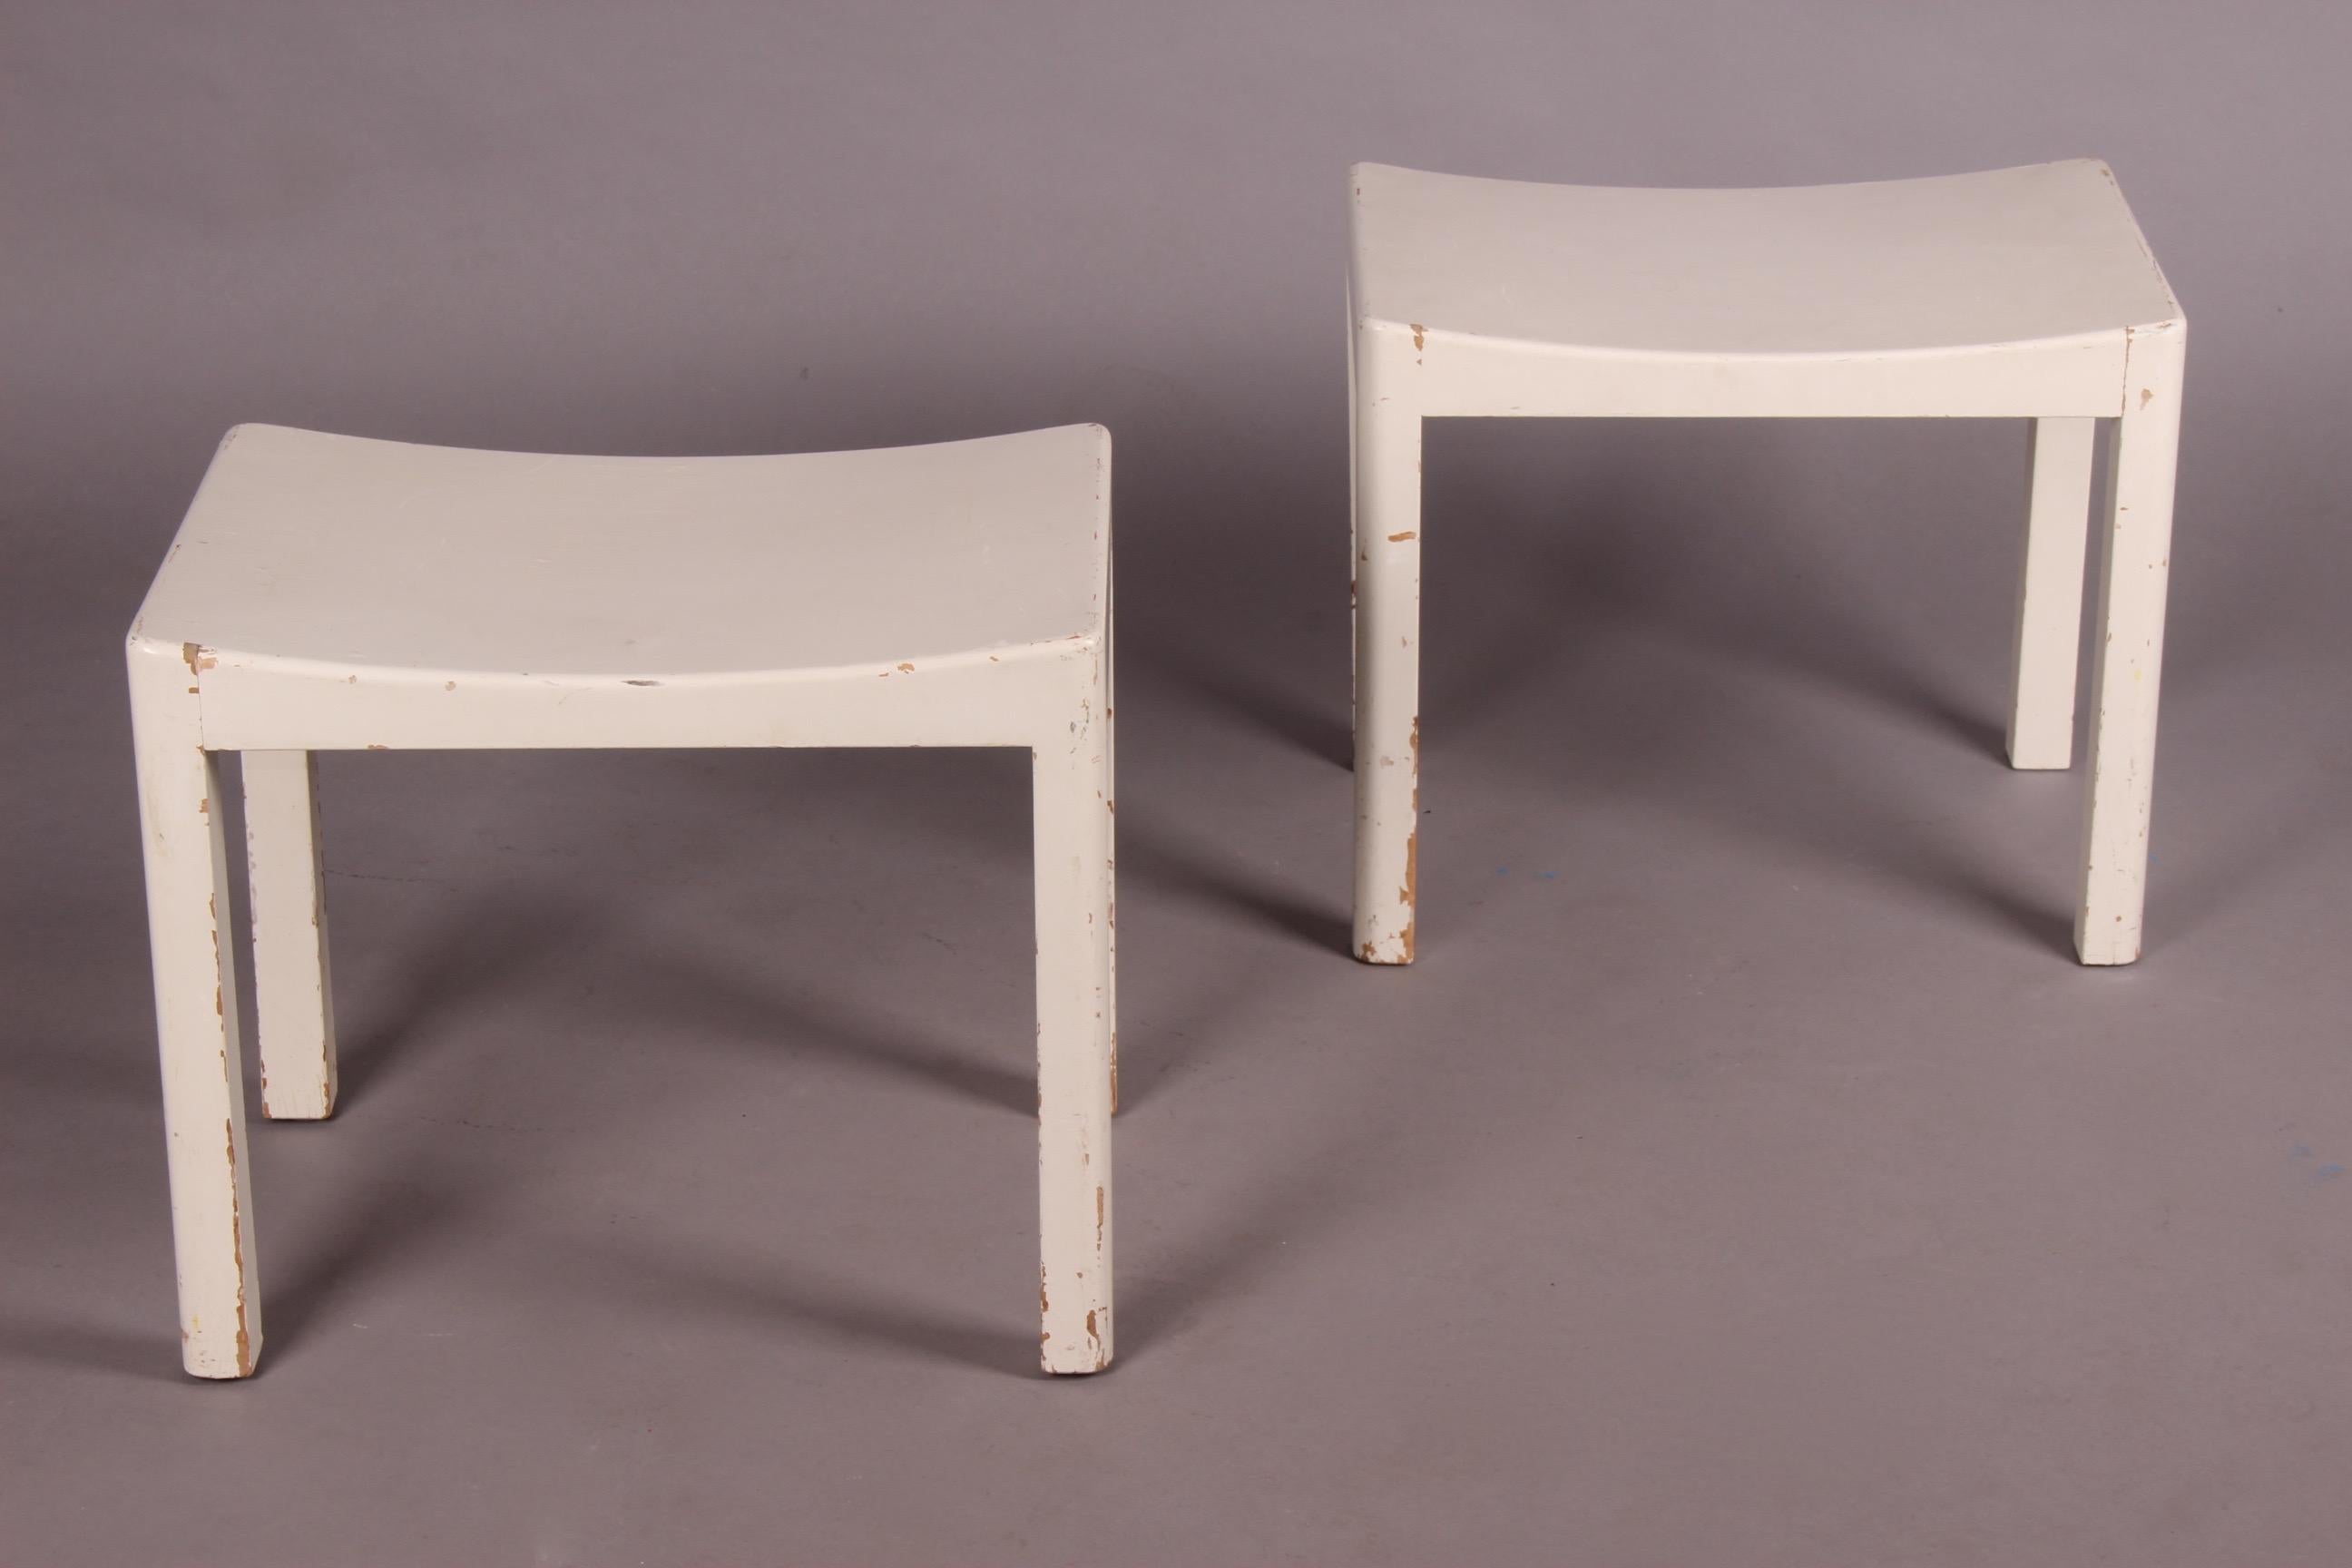 Painted wood pair of stools.